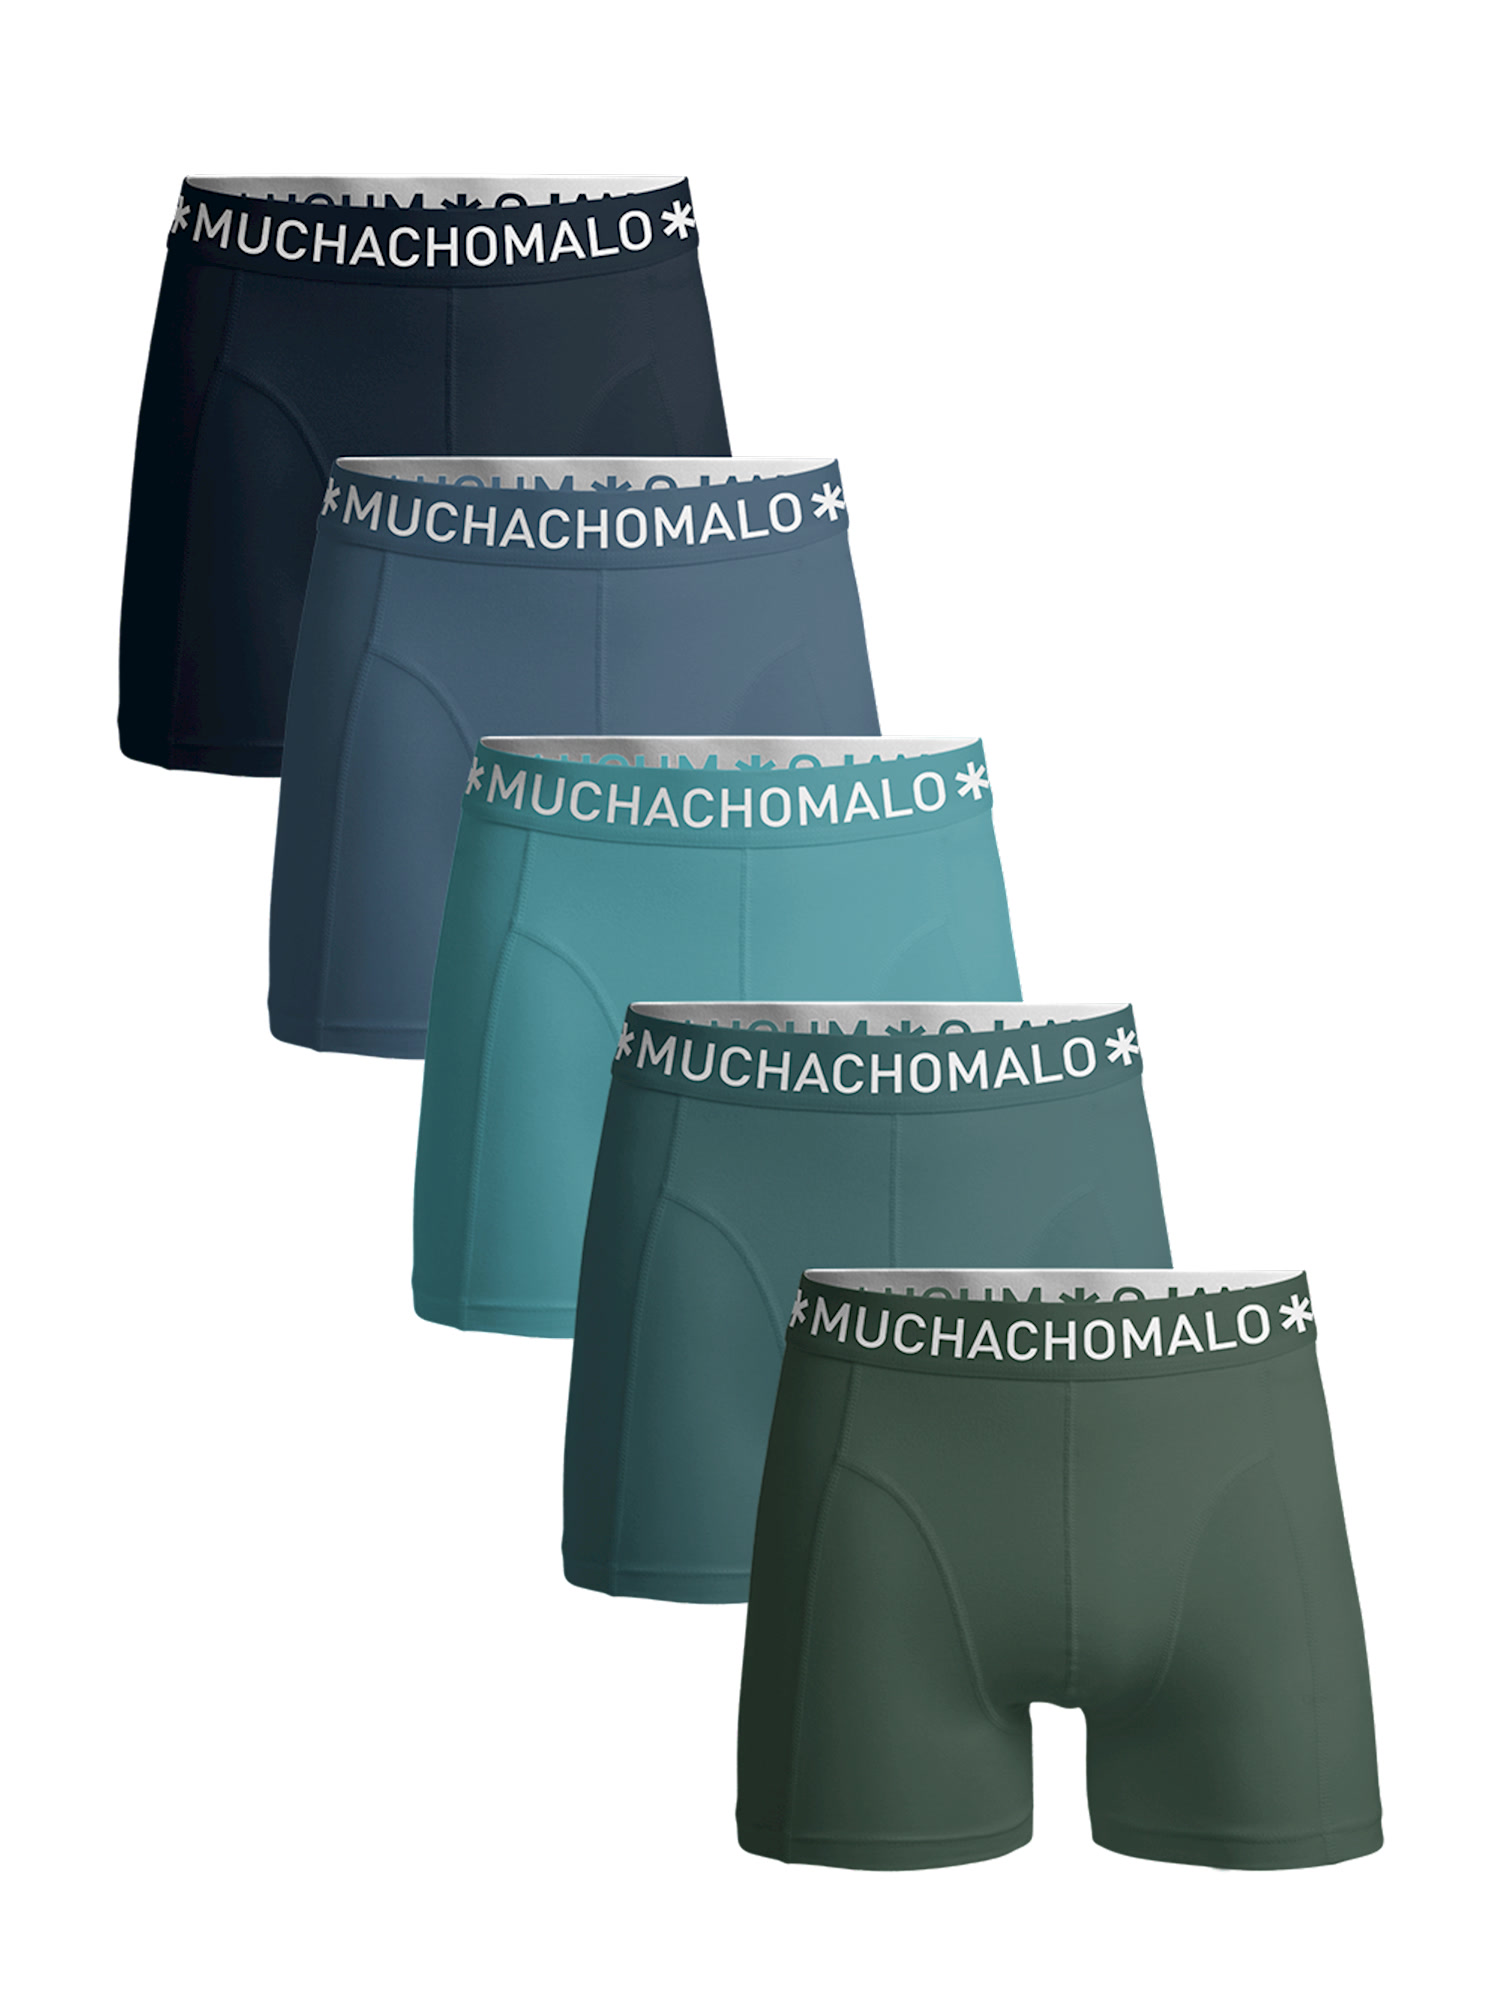 Боксеры Muchachomalo 5er-Set: Boxershorts, цвет Black/Blue/Blue/Green/Green серьги blue green